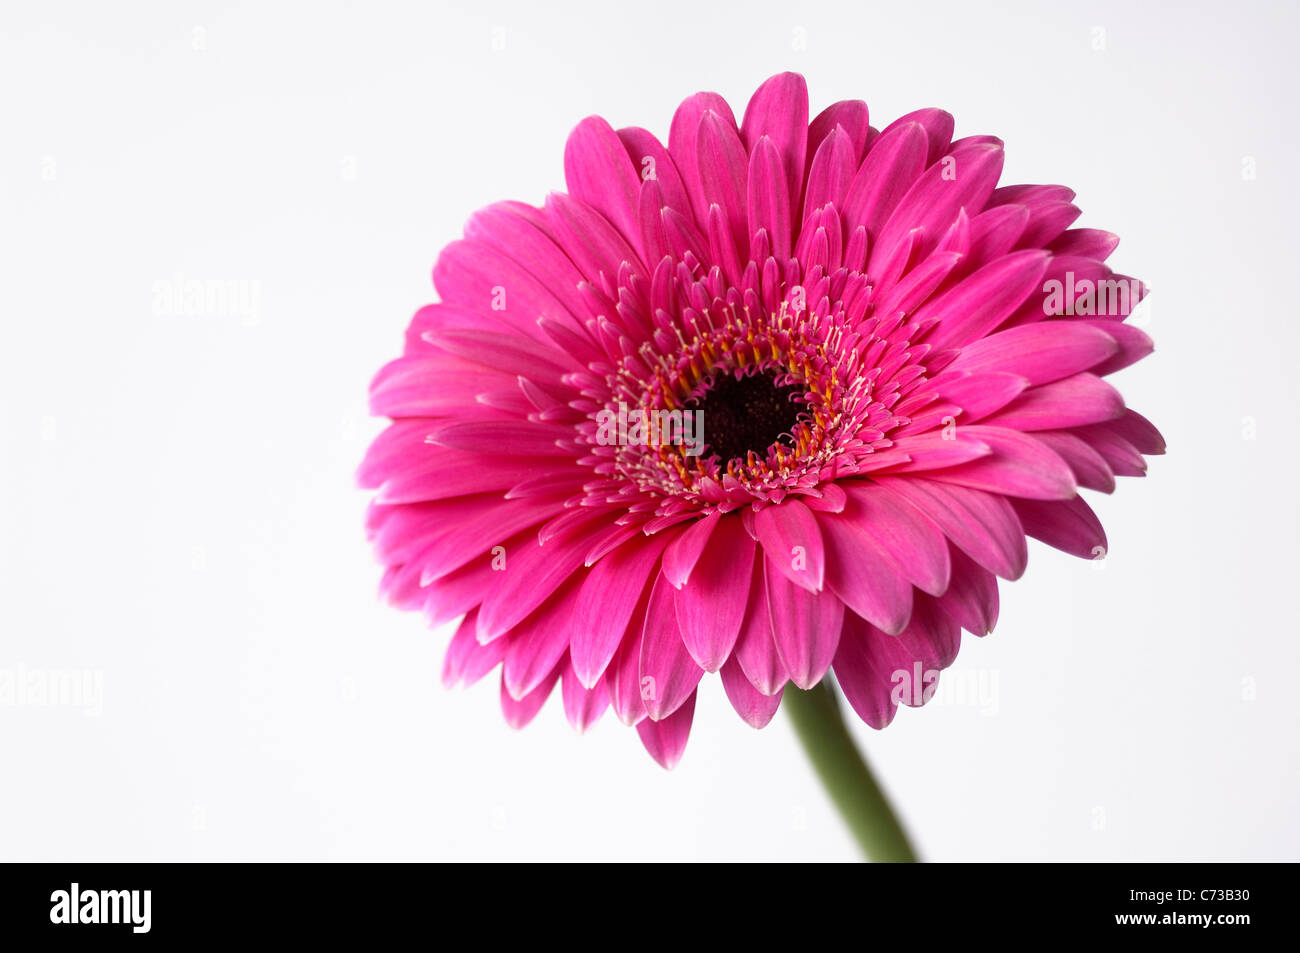 Barberton Daisy, Gerbera (Gerbera jamesonii). Pink flower seen against a white background. Stock Photo